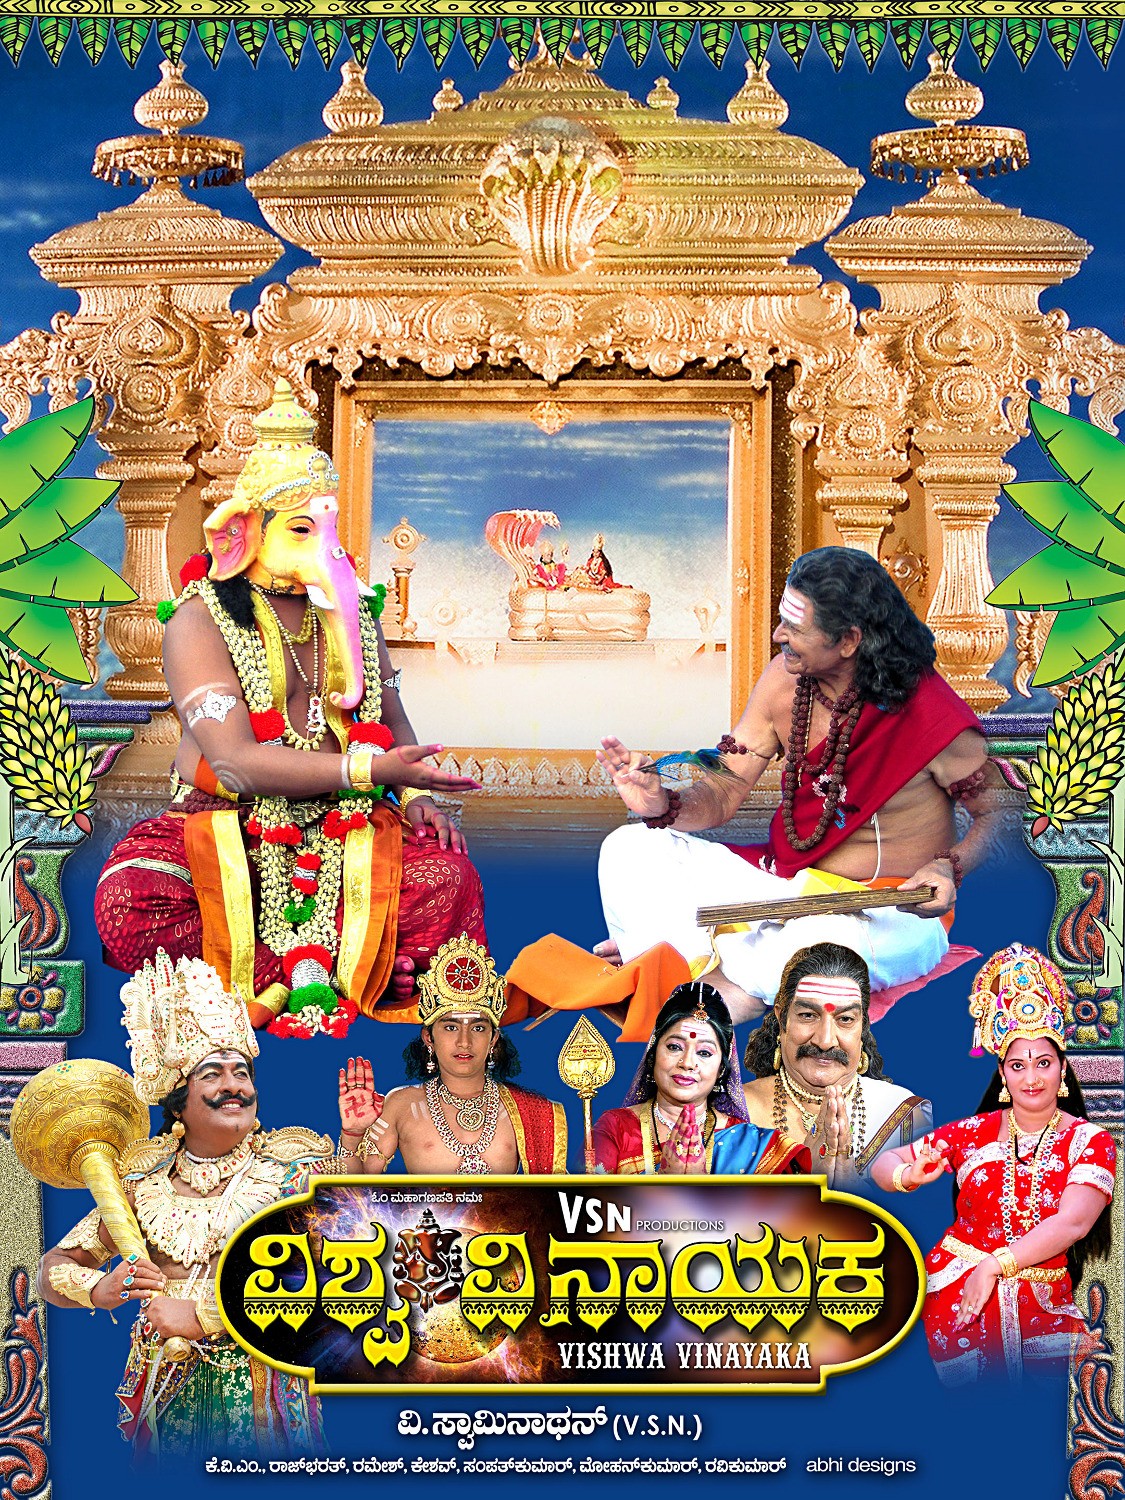 Extra Large Movie Poster Image for Vishwa Vinayaka (#7 of 7)